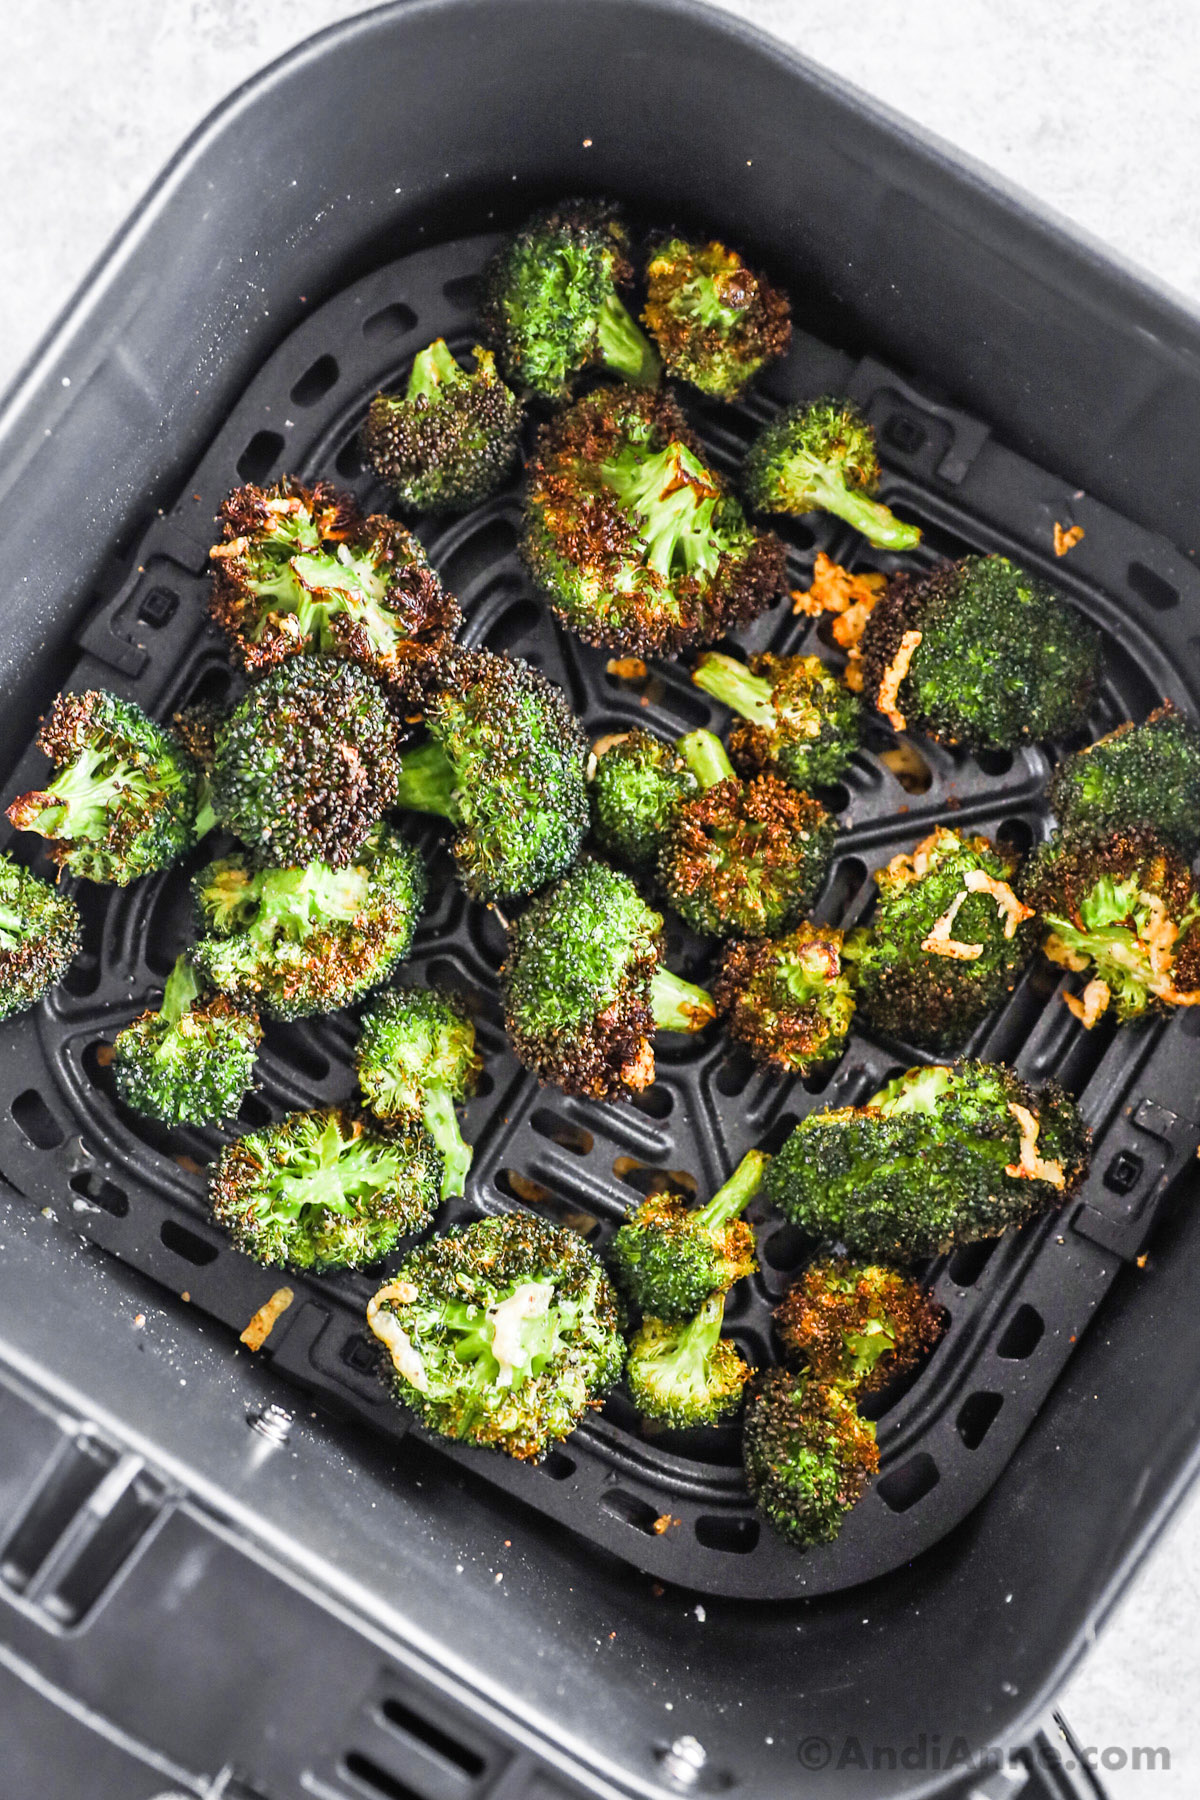 Crispy broccoli in an air fryer basket.